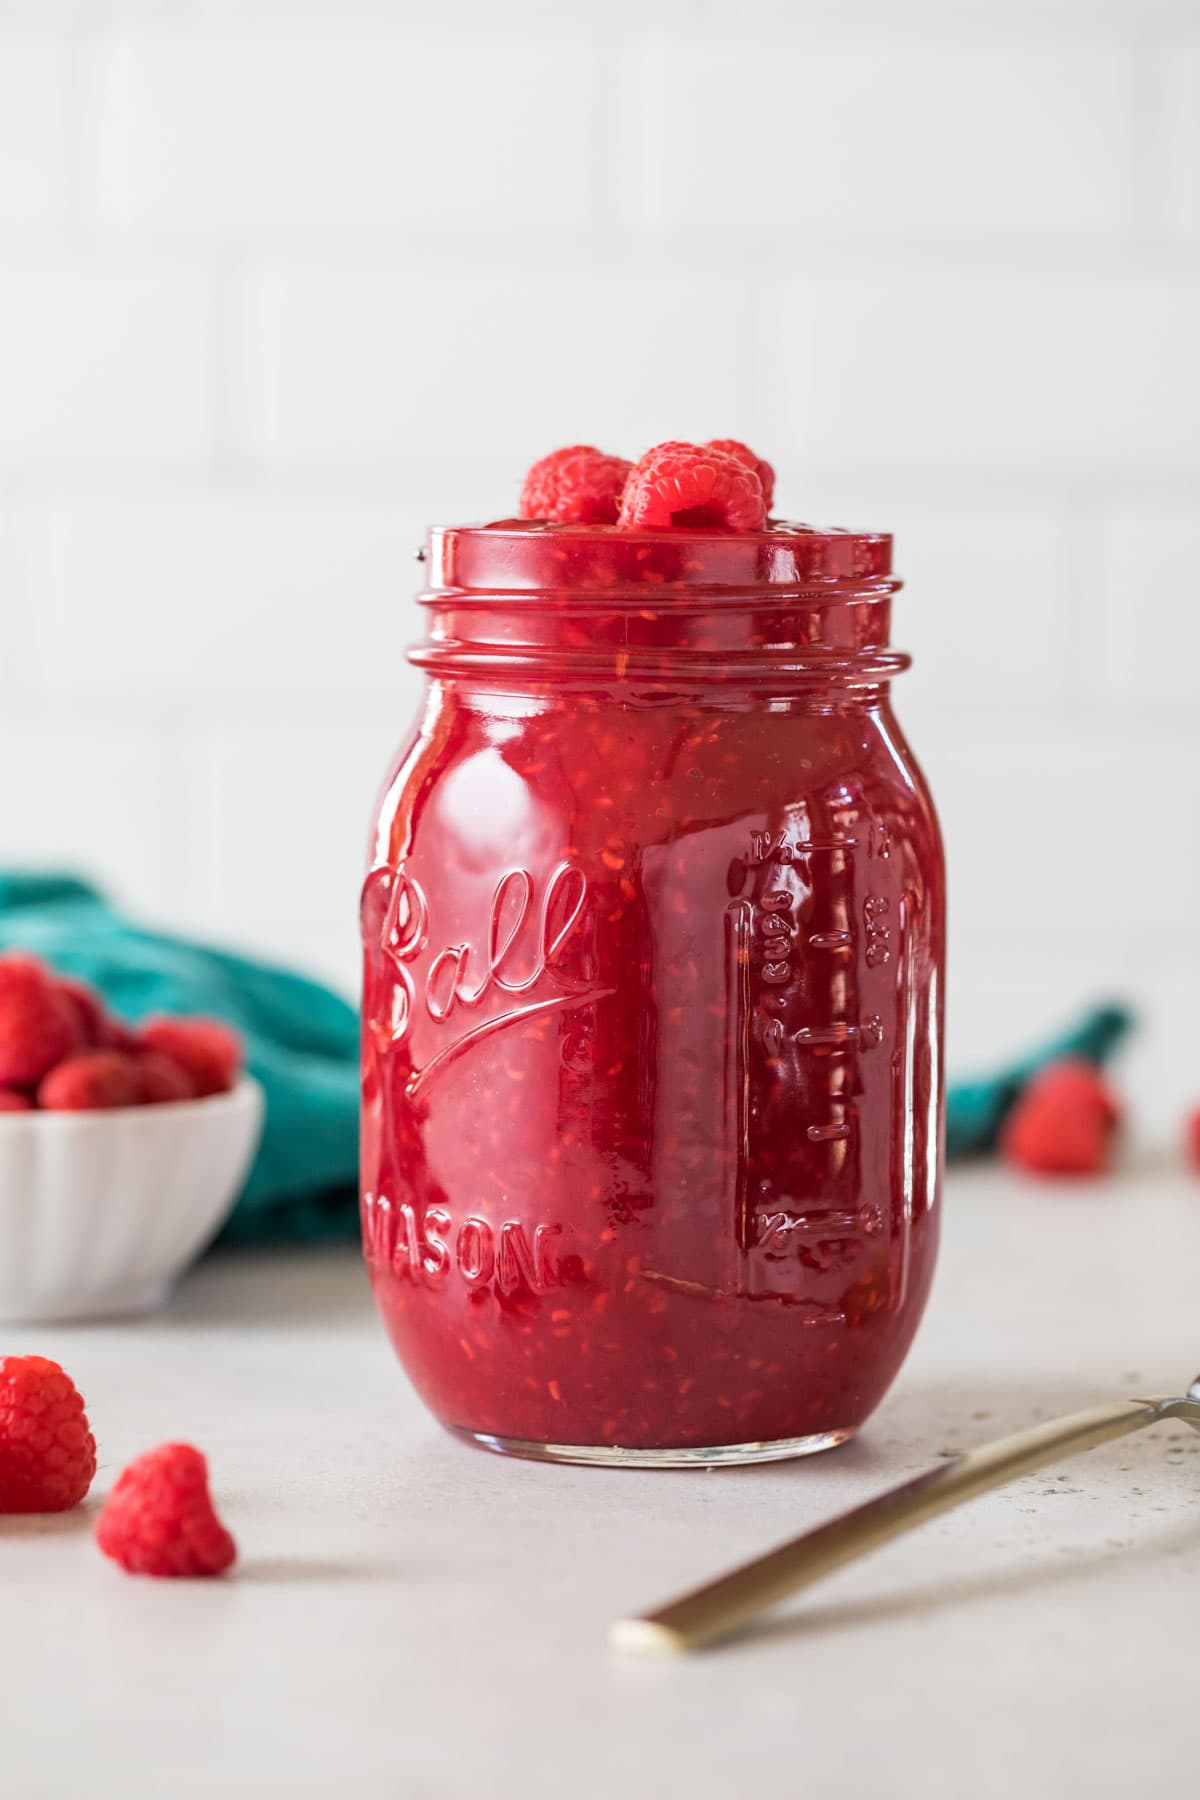 Mason jar of homemade raspberry sauce topped with fresh raspberries.